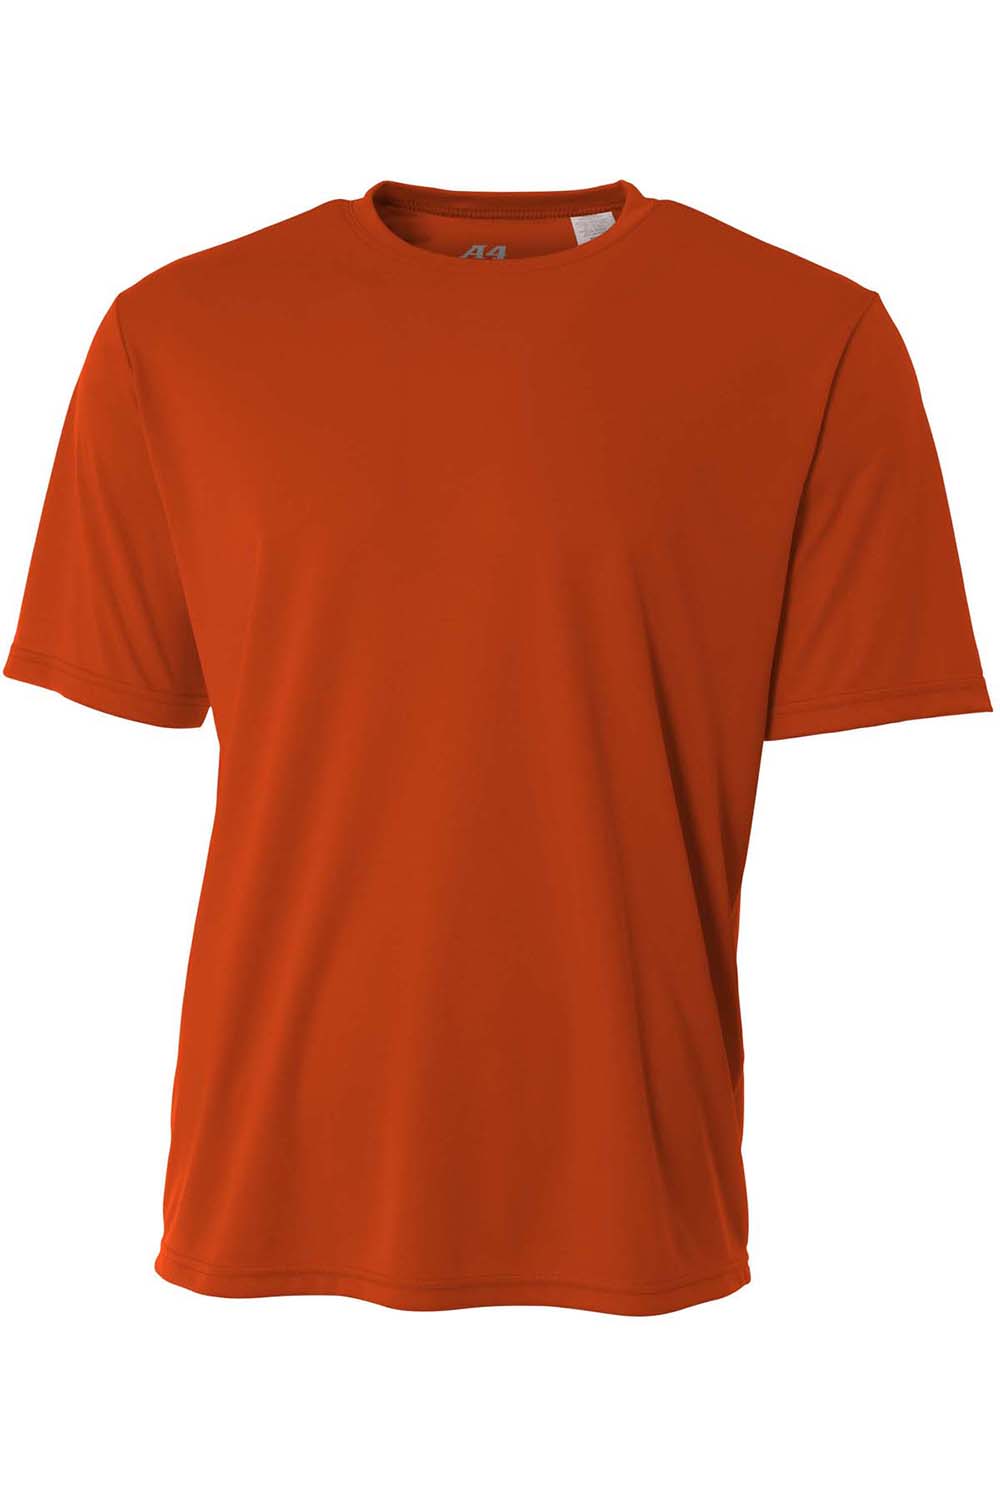 A4 N3142 Mens Performance Moisture Wicking Short Sleeve Crewneck T-Shirt Orange Flat Front